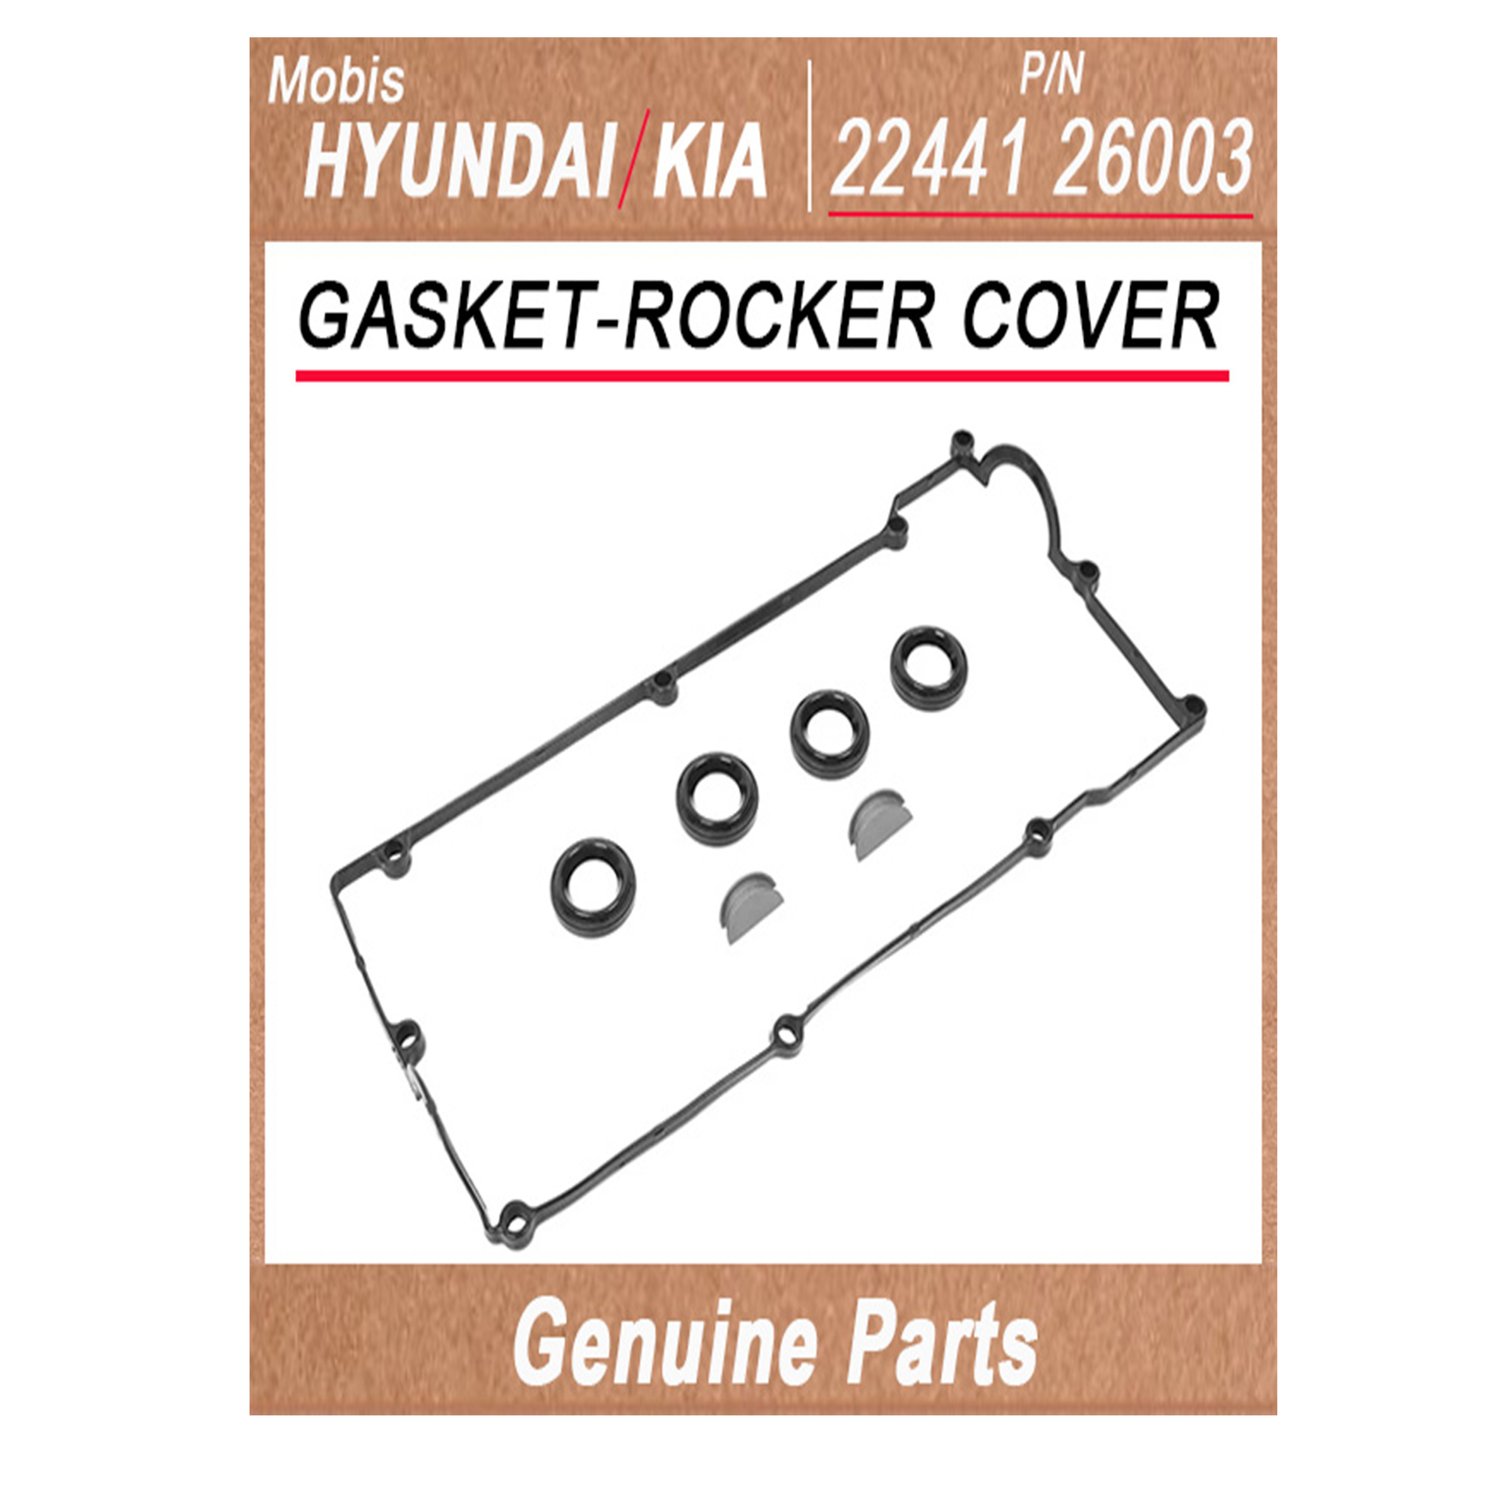 2244126003 _ GASKET_ROCKER COVER _ Genuine Korean Automotive Spare Parts _ Hyundai Kia _Mobis_